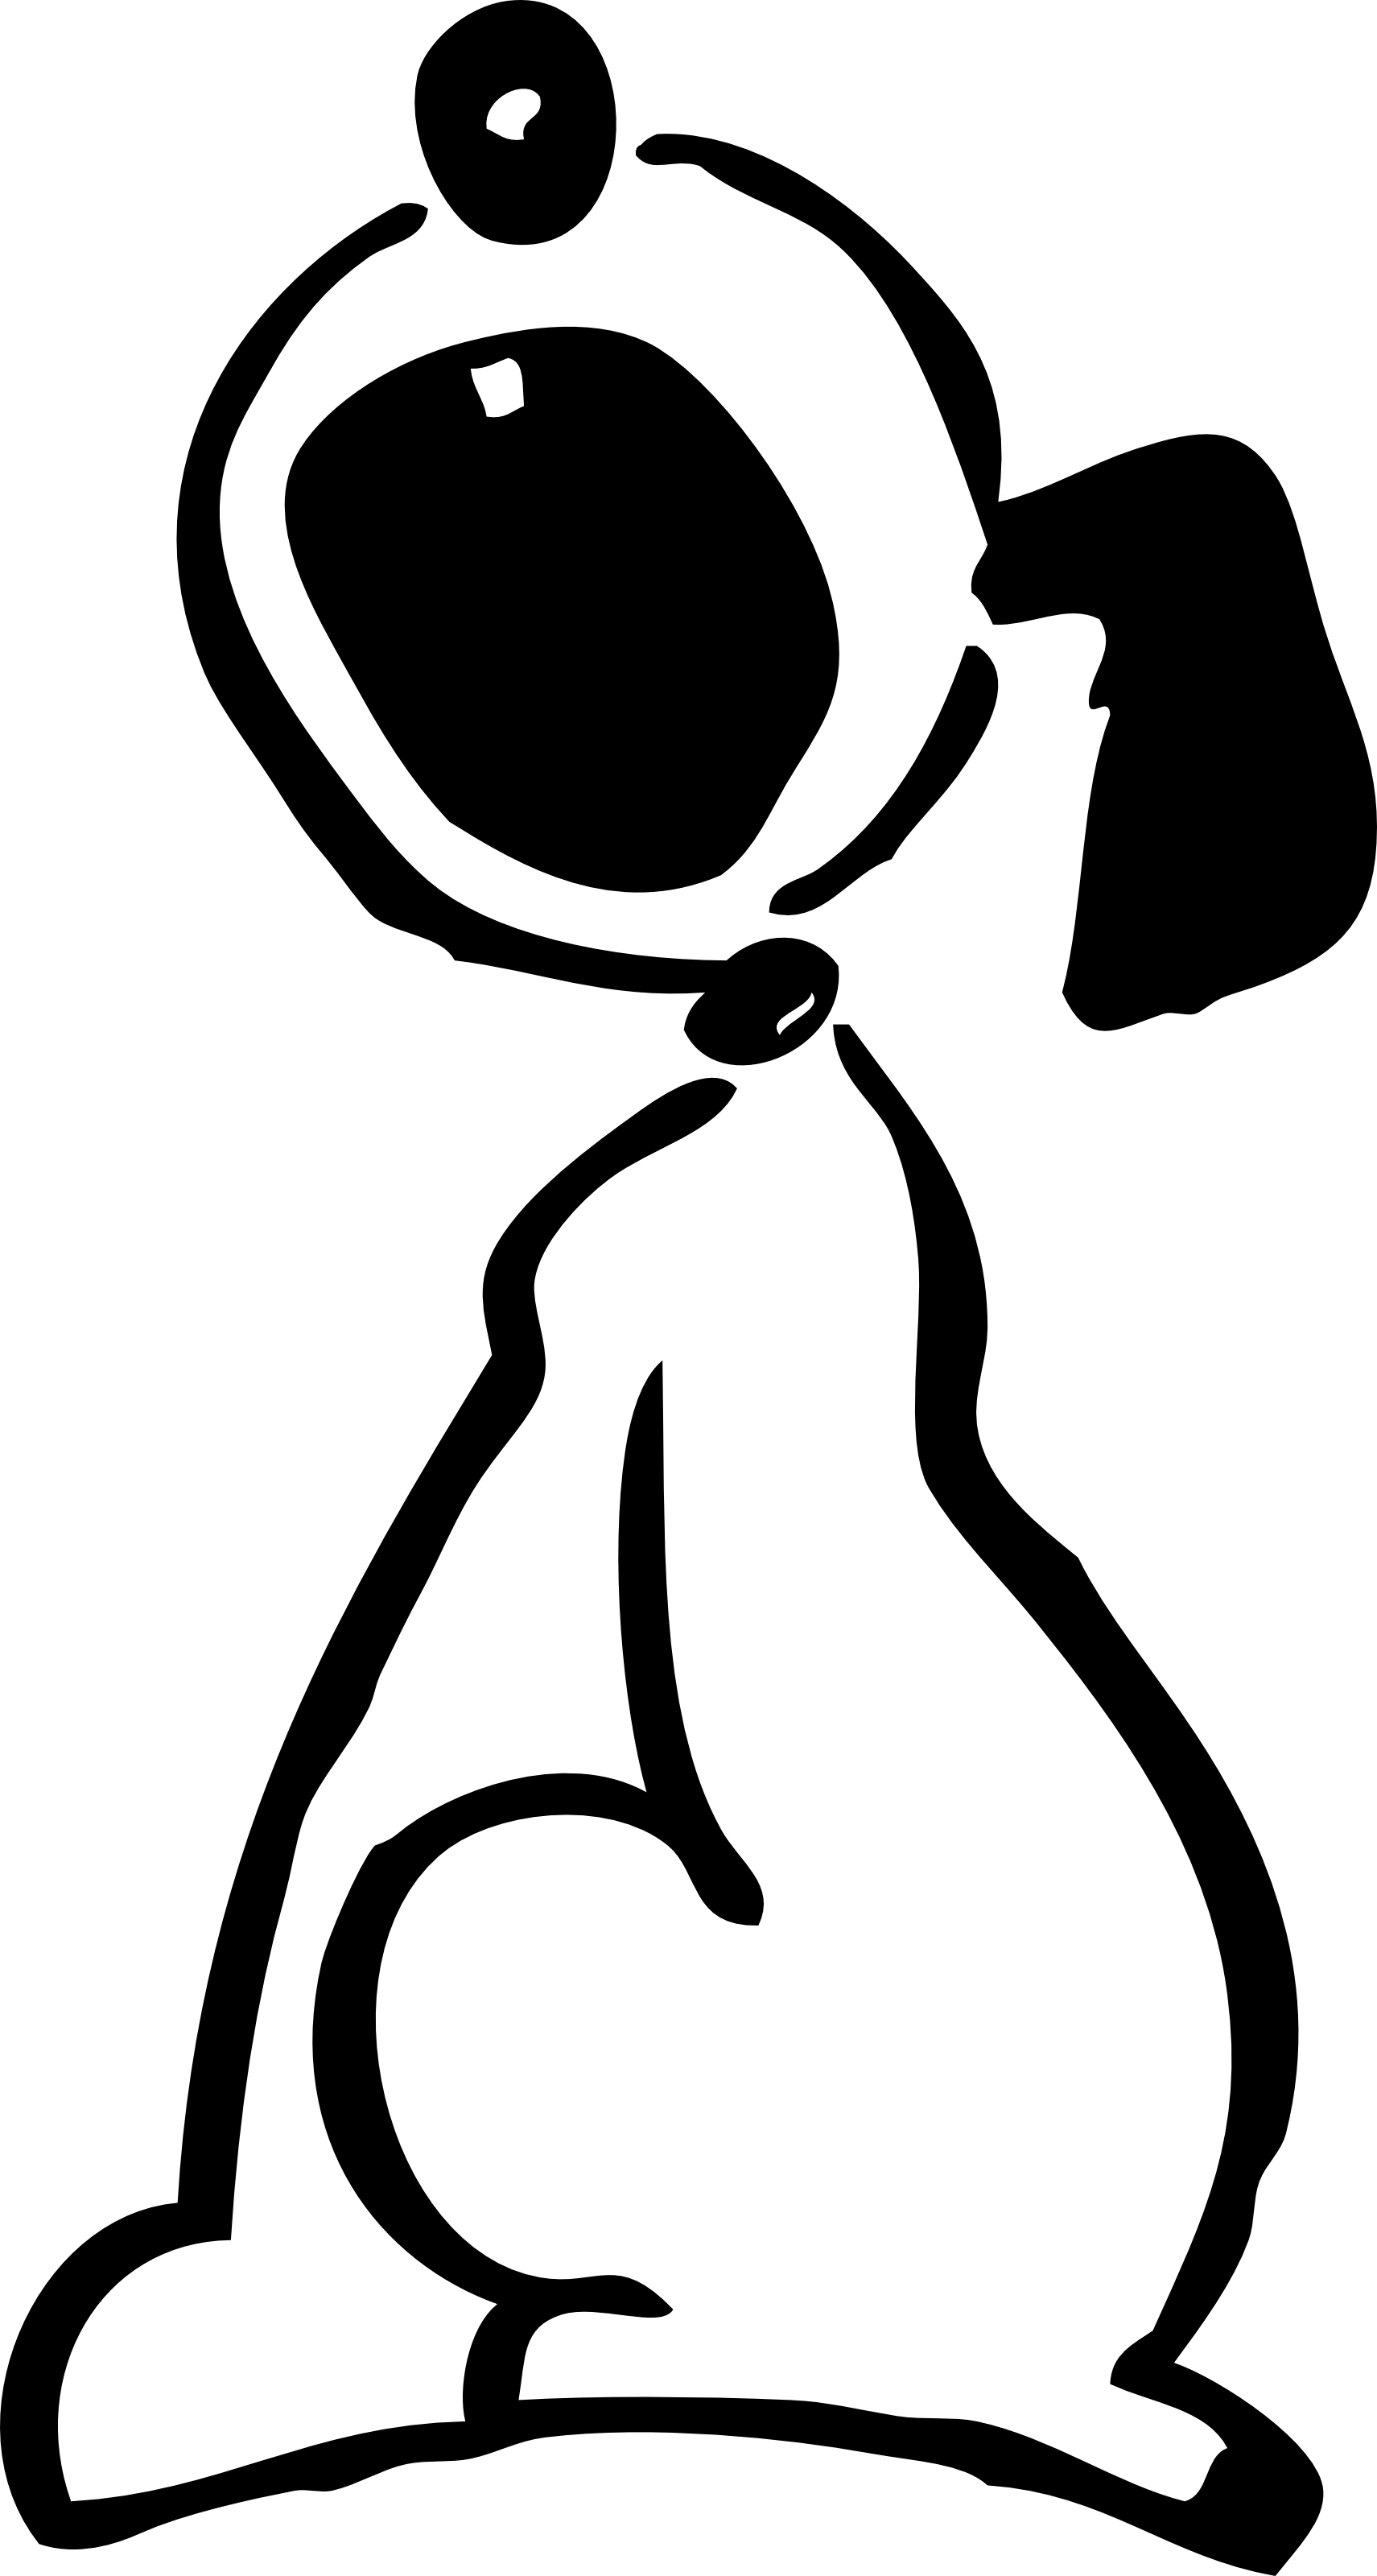 Cute Dog Clip Art Black And White | Clipart Panda - Free Clipart ...